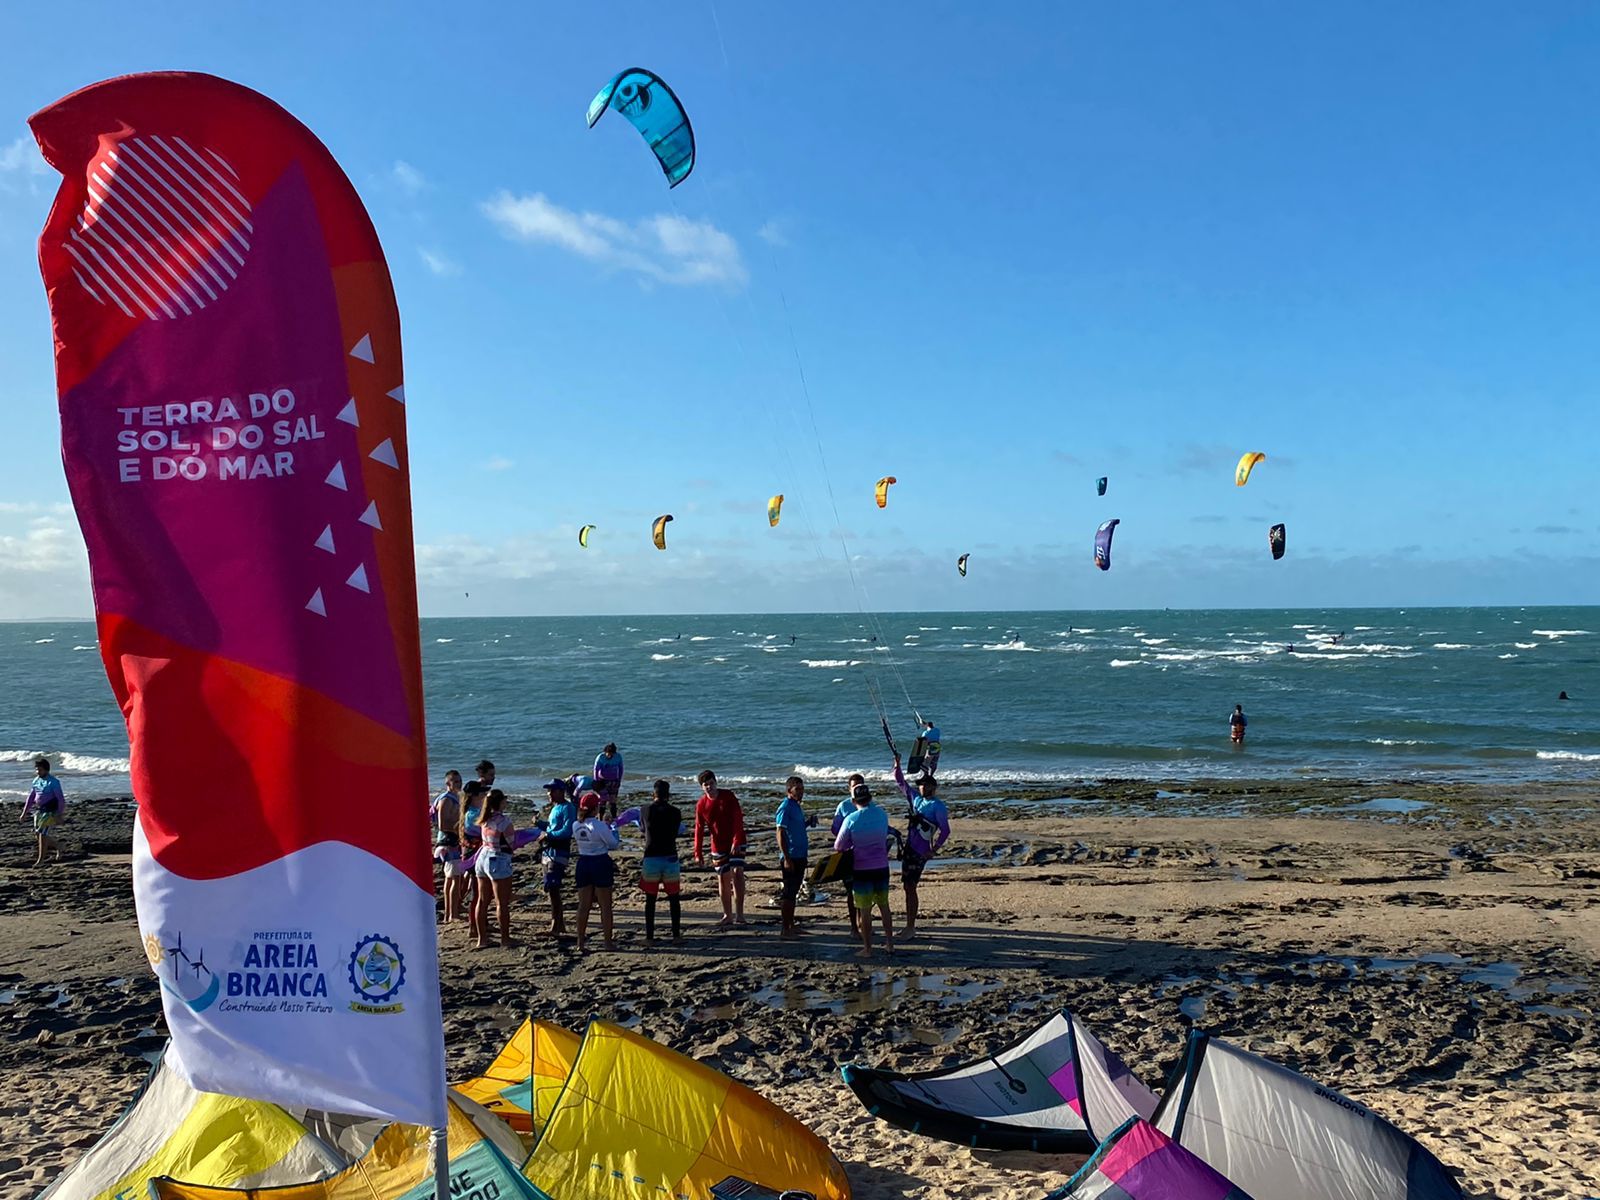 Areia Branca vai sediar maior festival de kitsurf da Costa Branca nos dias 15 e 16 de outubro